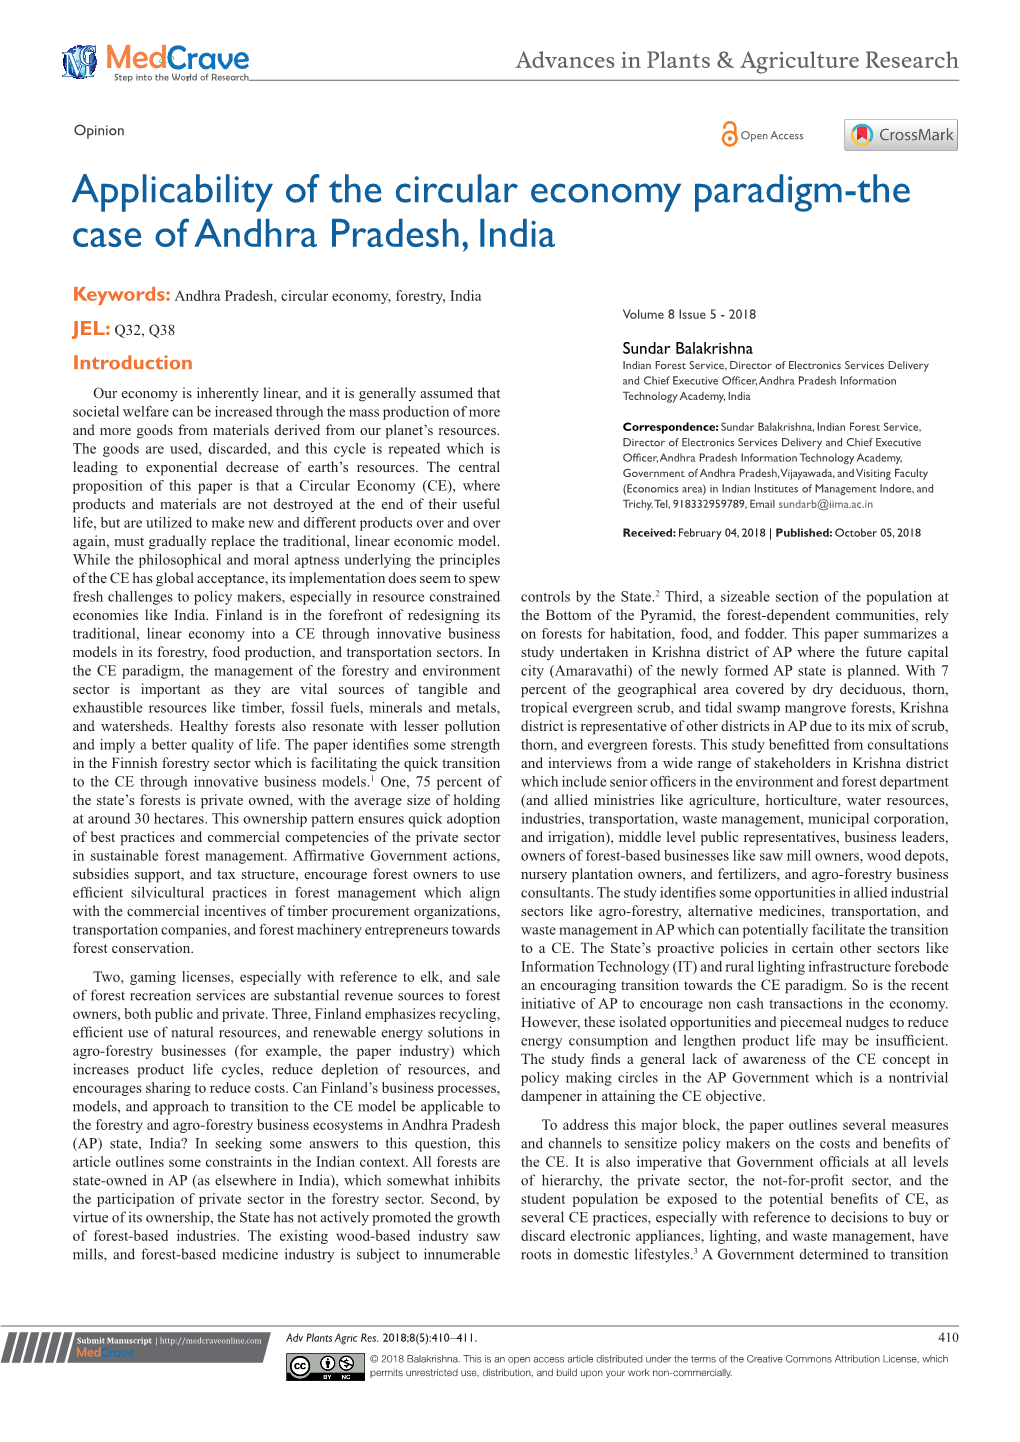 Applicability of the Circular Economy Paradigm-The Case of Andhra Pradesh, India